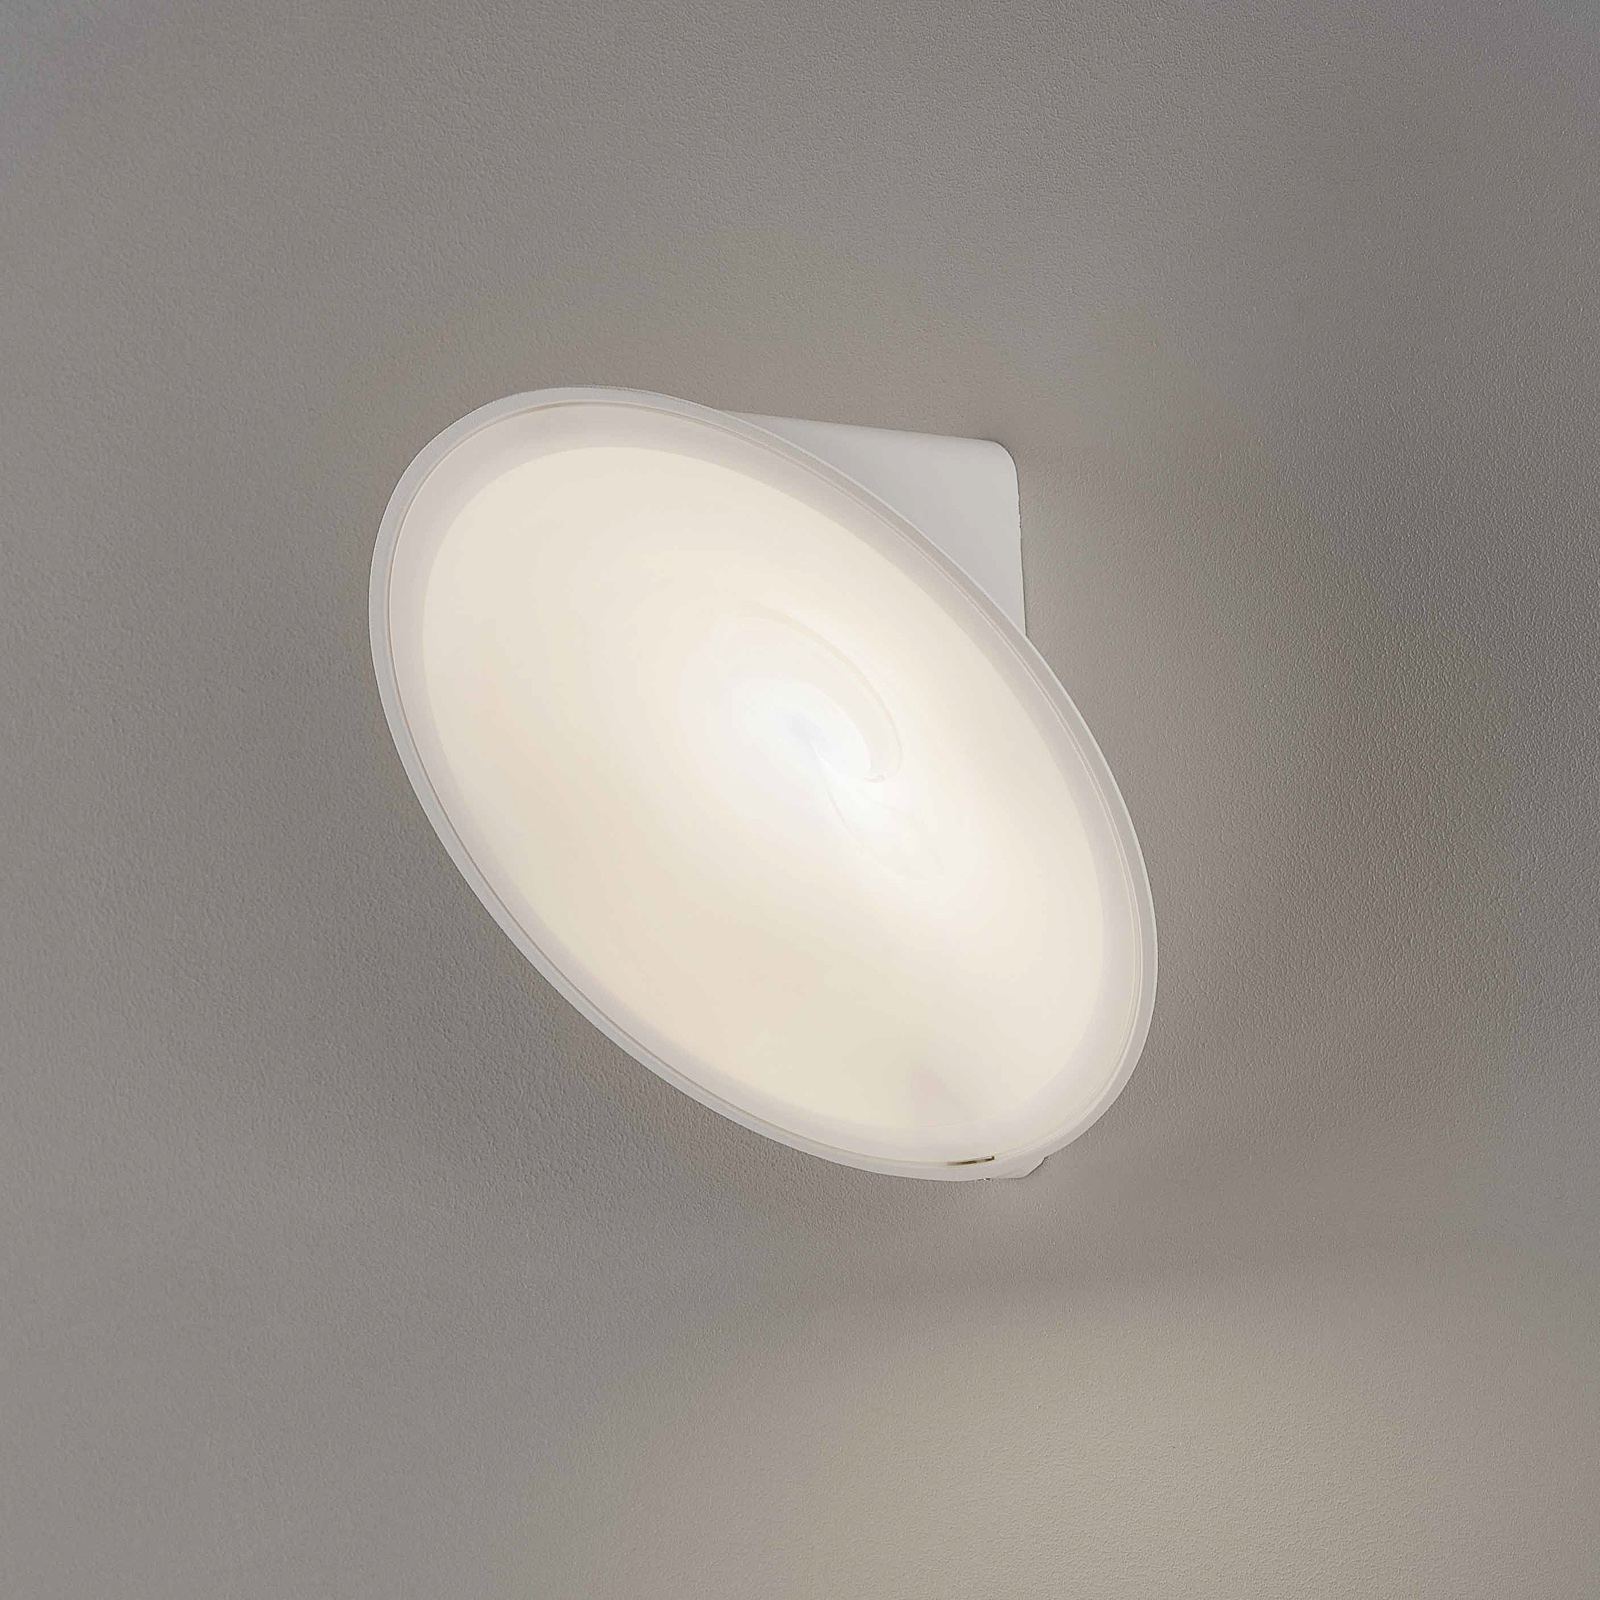 Axolight Orchid aplique LED, blanco